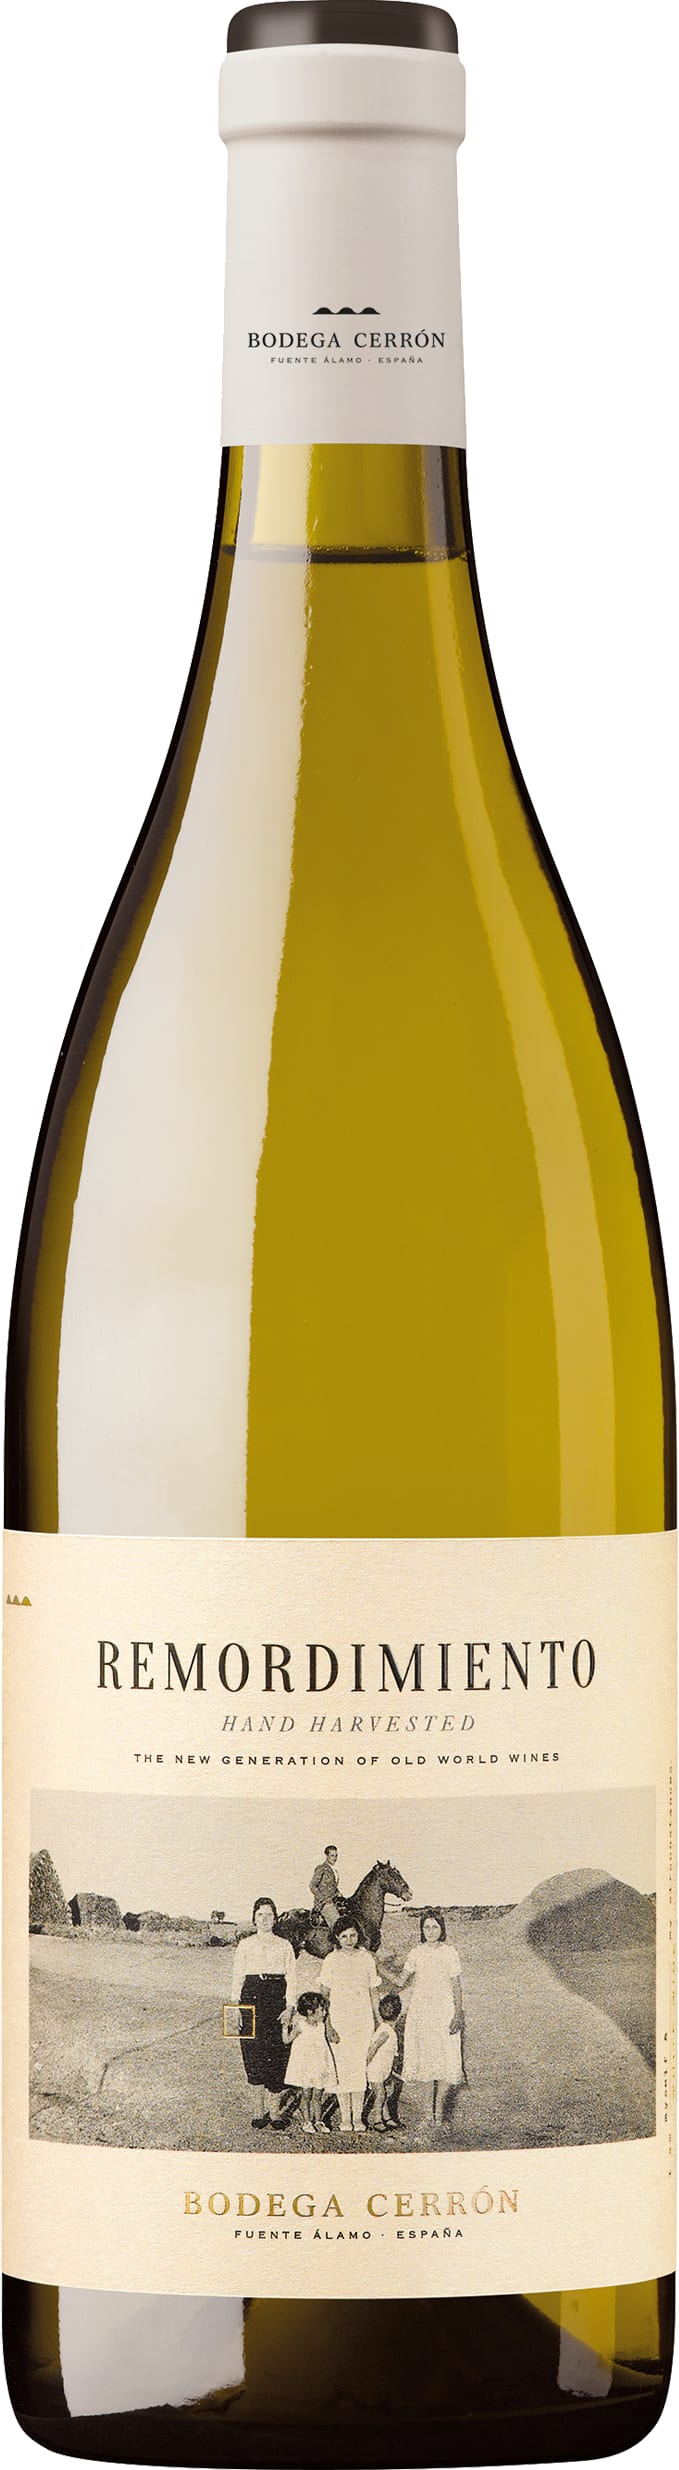 Bodega Cerron Remordimiento White 2022 75cl - Buy Bodega Cerron Wines from GREAT WINES DIRECT wine shop